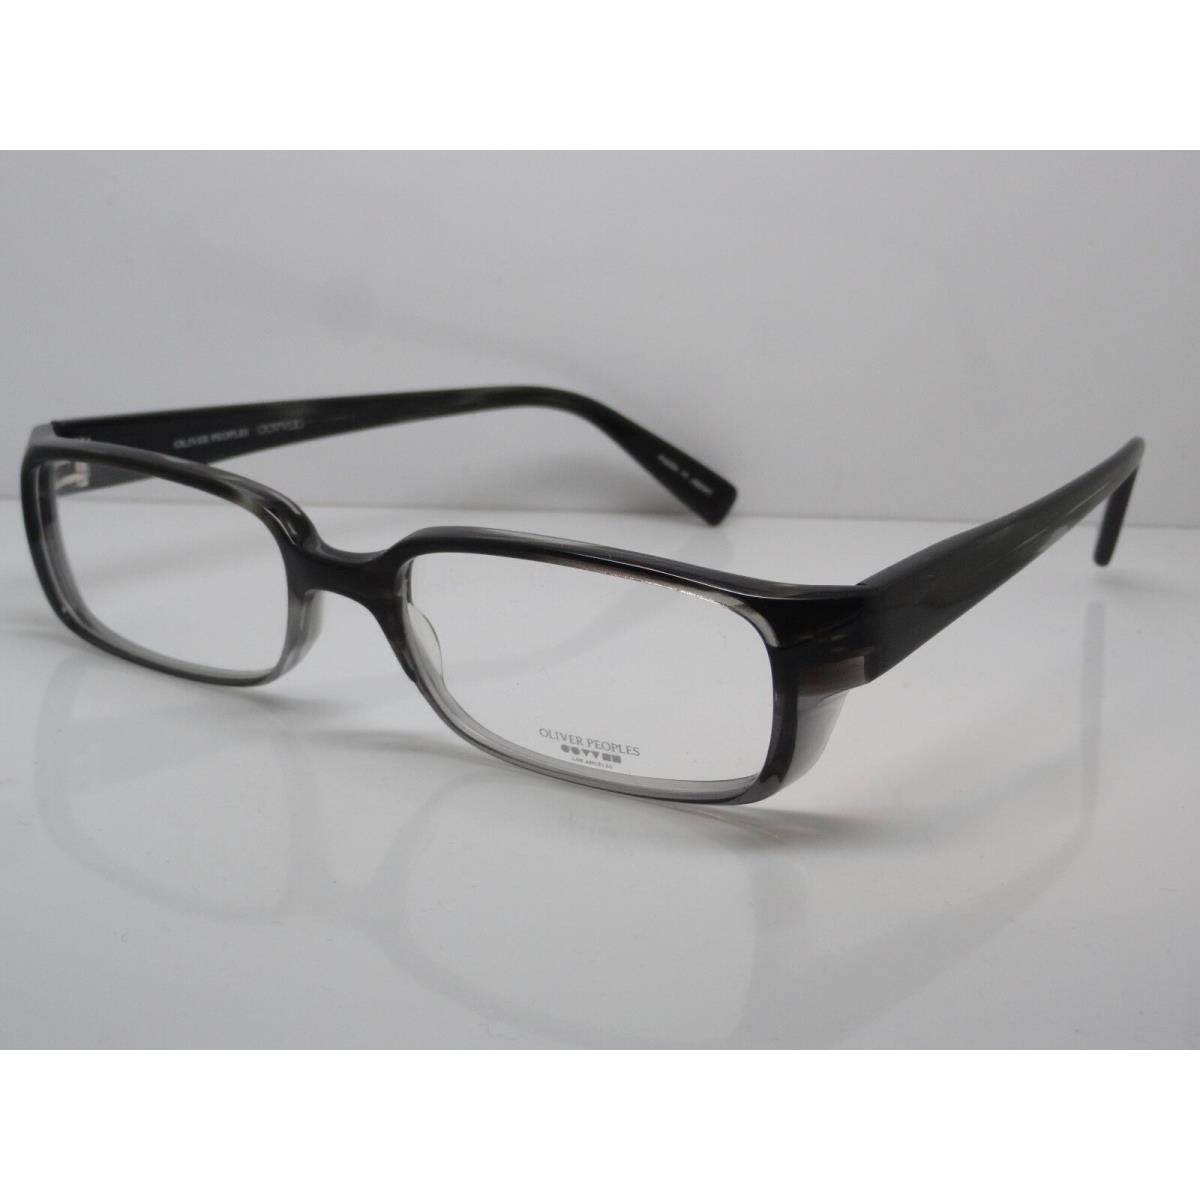 Oliver Peoples eyeglasses GEHRY - Storm Grey Frame, Clear Demo Lens 0